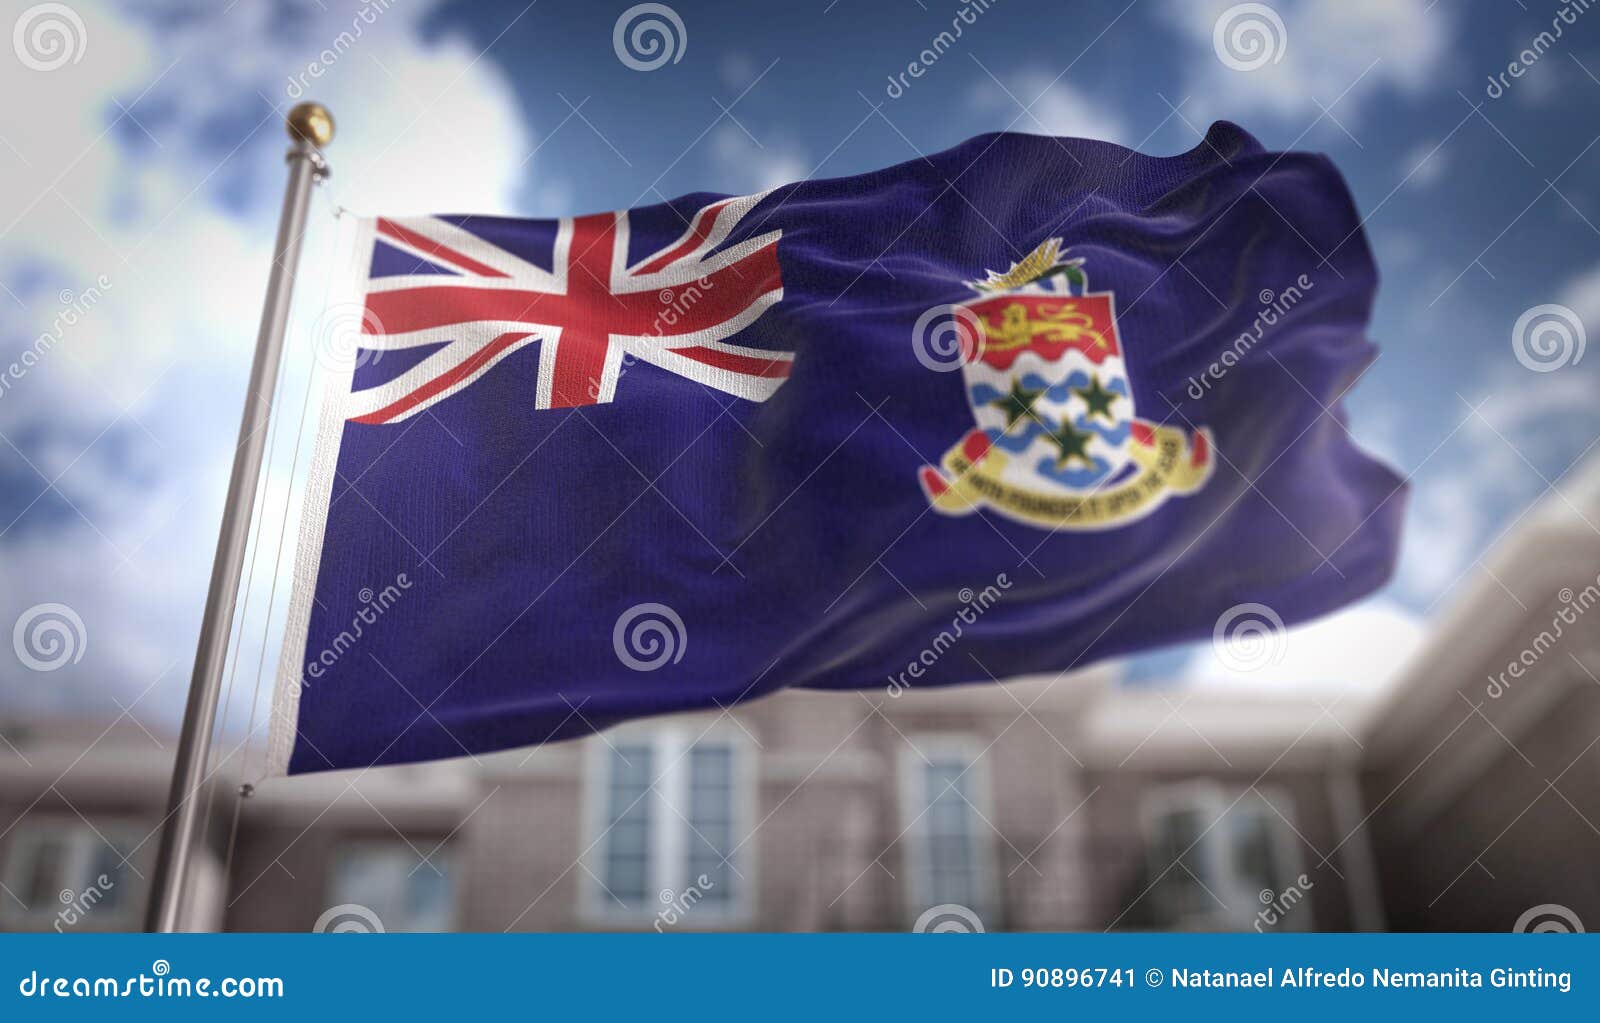 cayman islands flag 3d rendering on blue sky building background